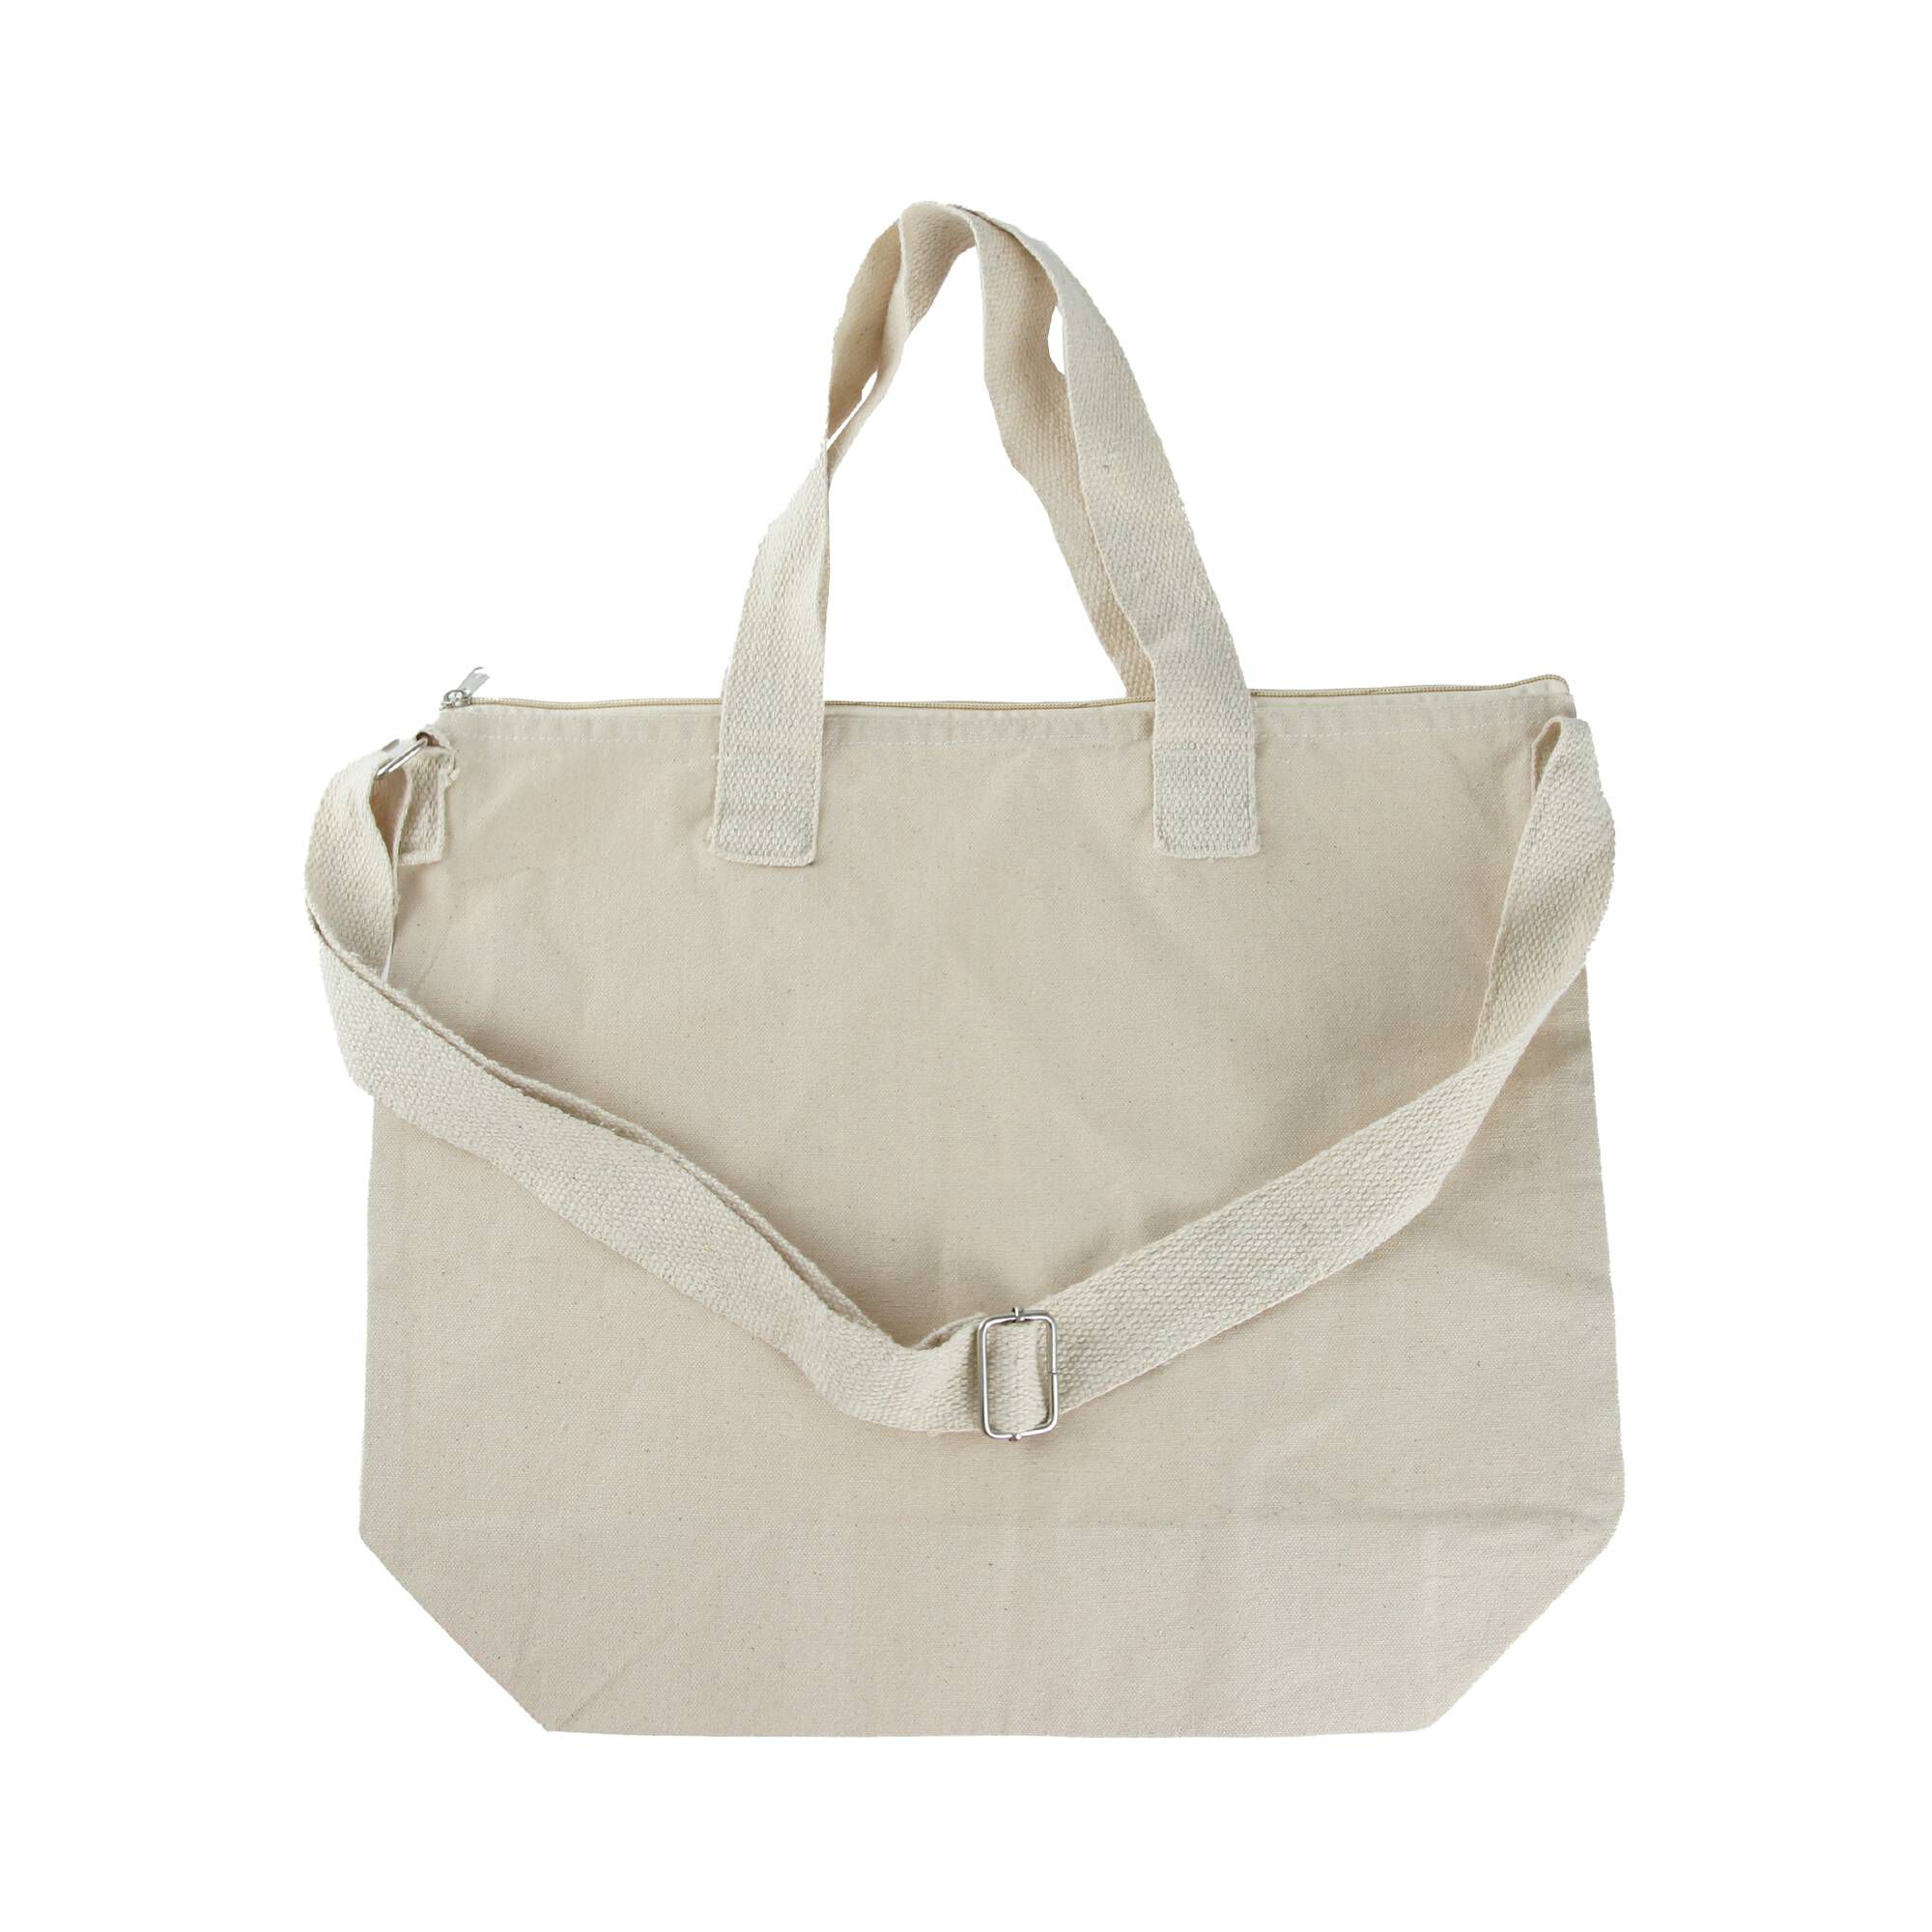 Beginner Bag Sewing Pattern, Project Bag Tutorial, 2 Sizes, Easy Tote Bag  Pattern, PDF, Knitting Bag, Instant Download - Etsy